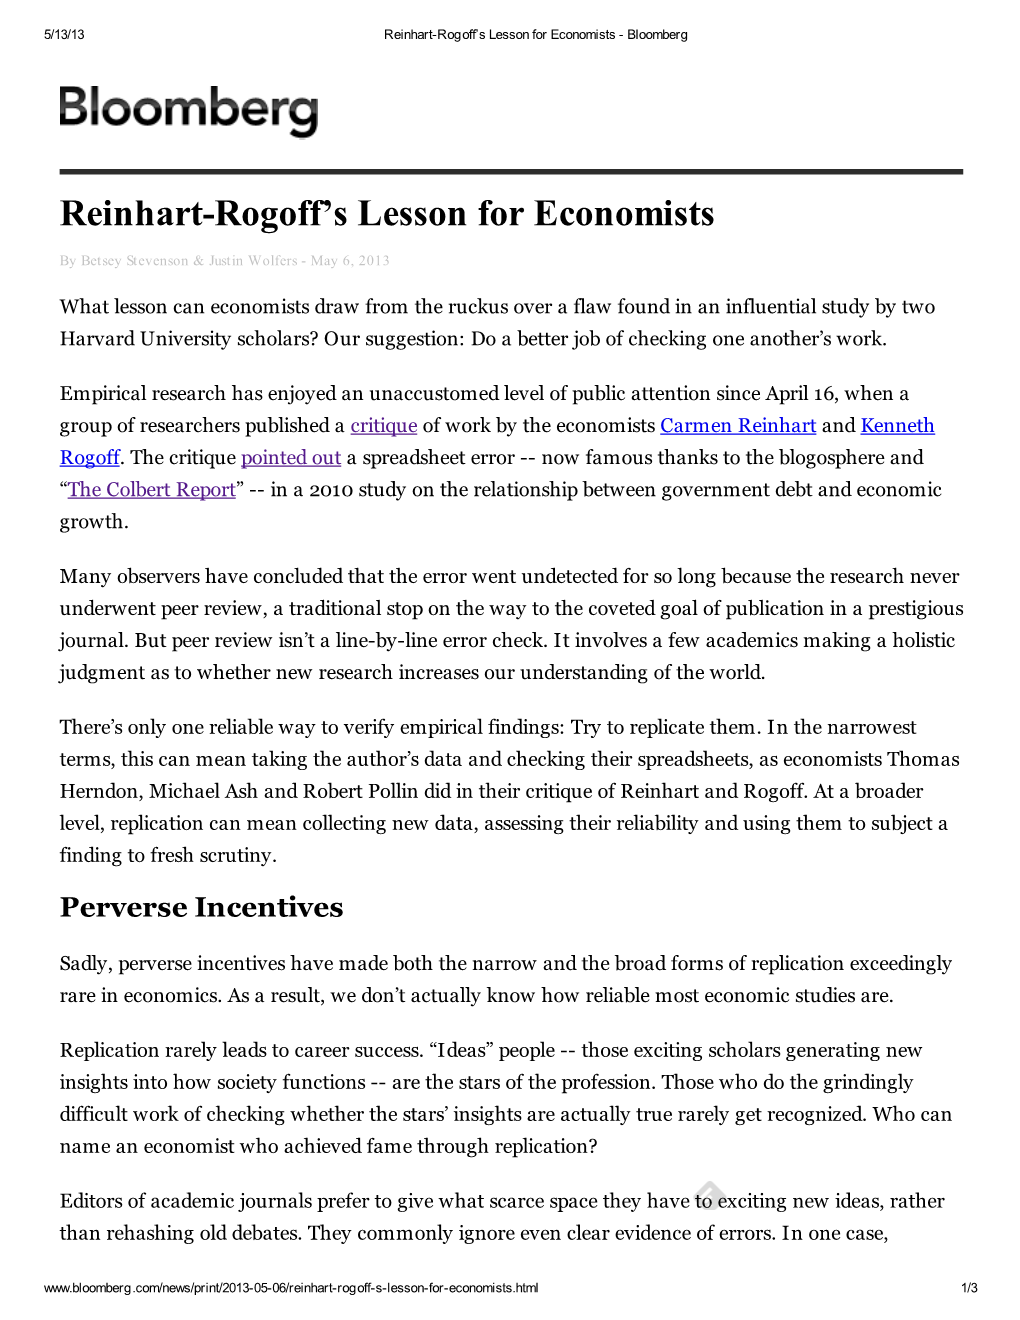 Reinhart-Rogoff's Lesson for Economists